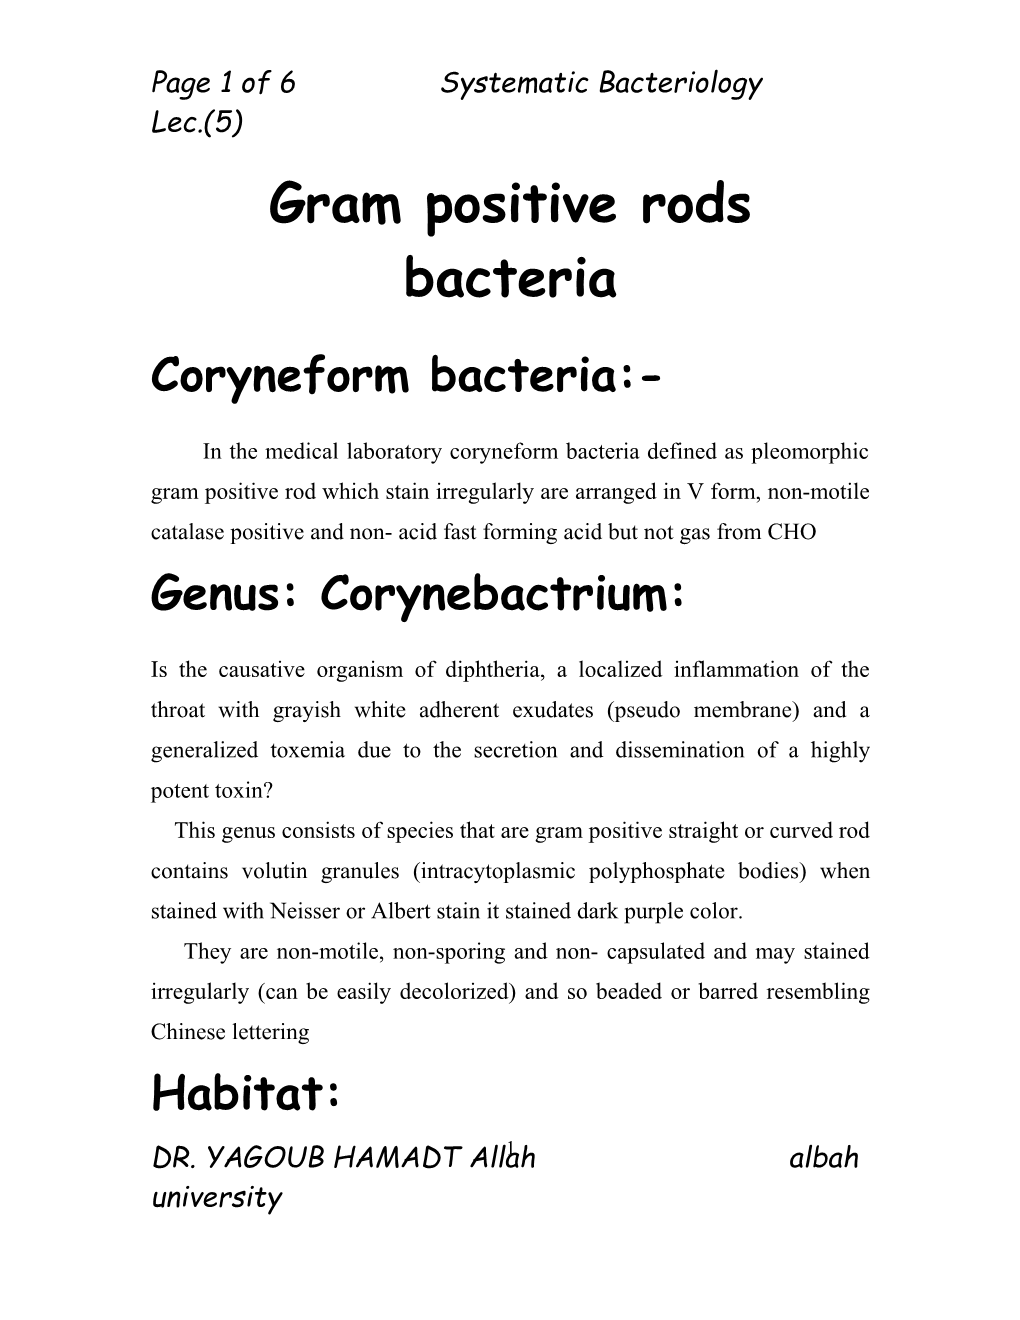 Gram Positive Rods Bacteria